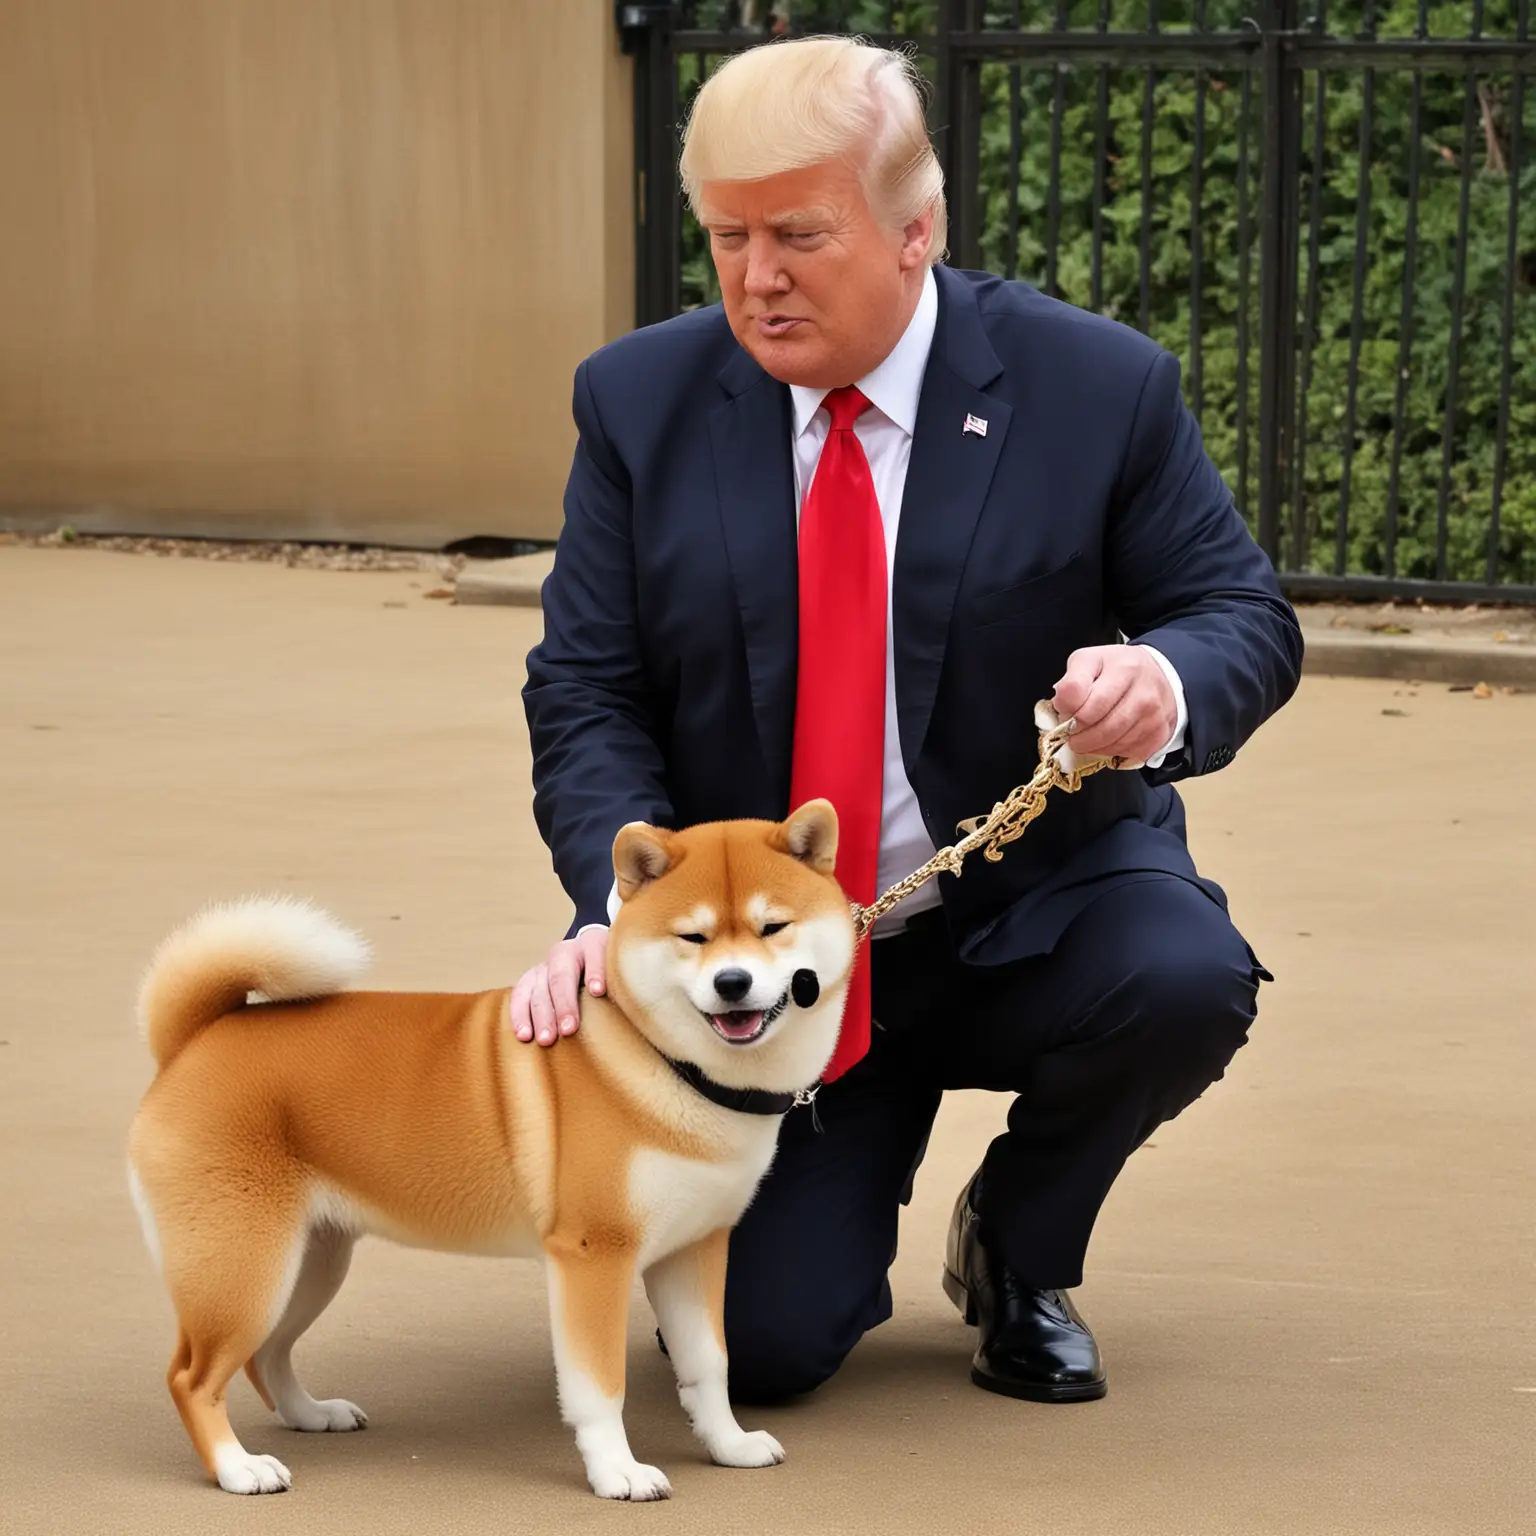 Donald Trump strokes the dog Shiba inu